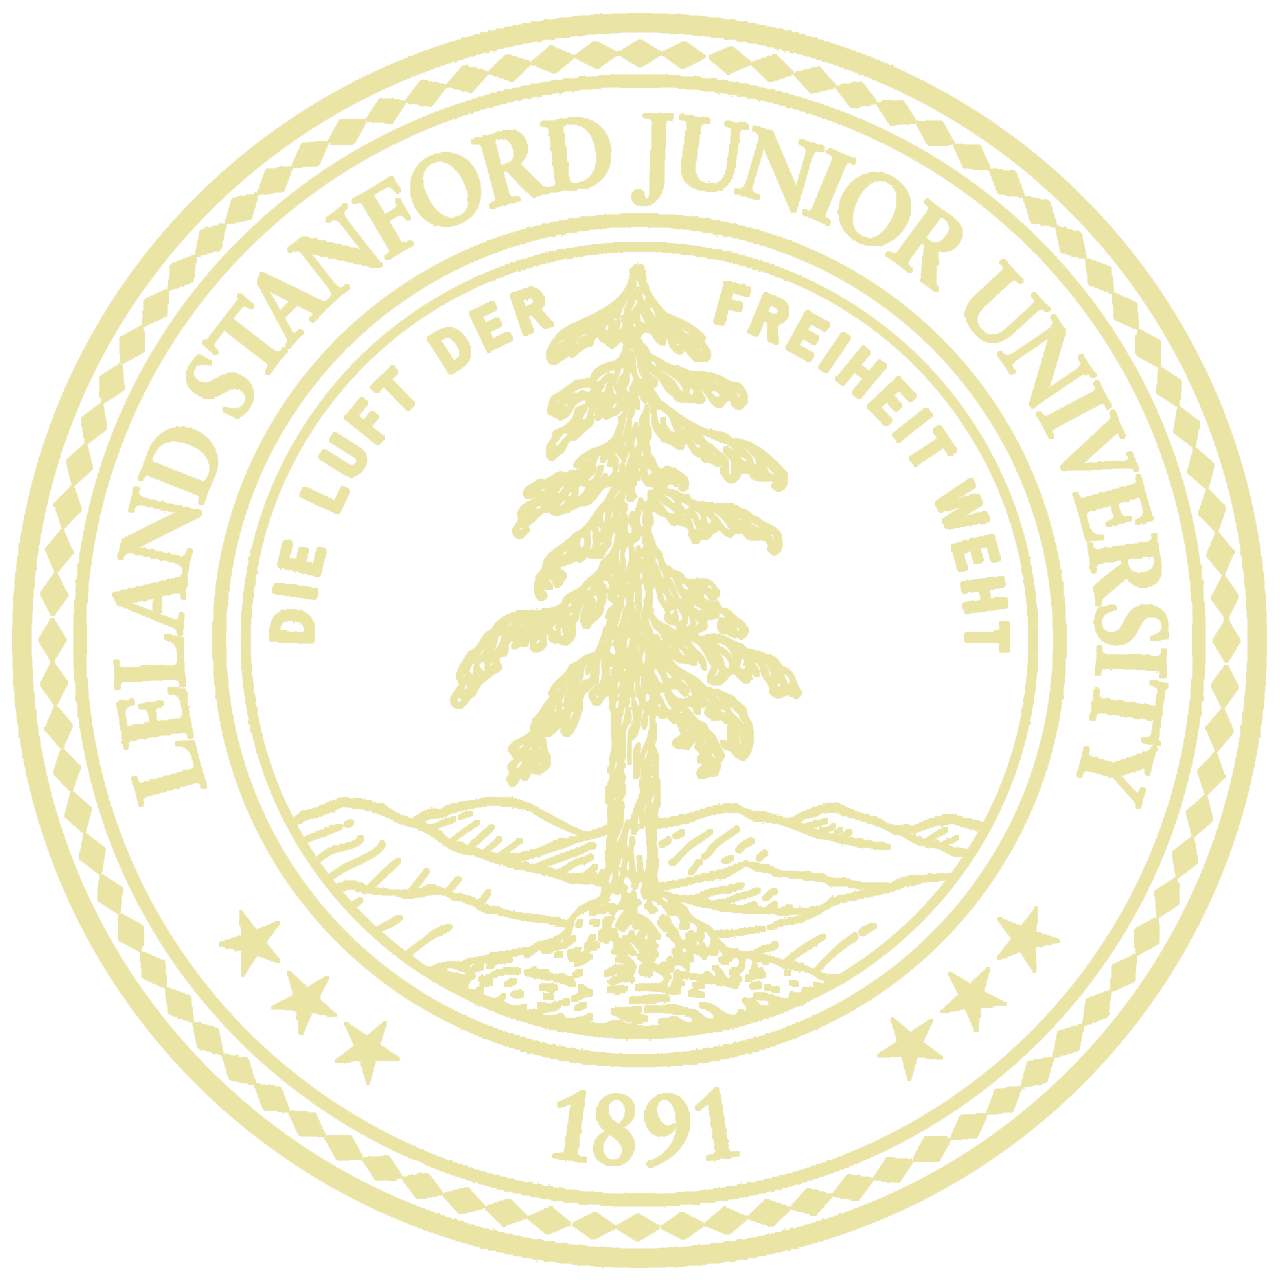 HAPPY TASSEL | Stanford University Gold Seal